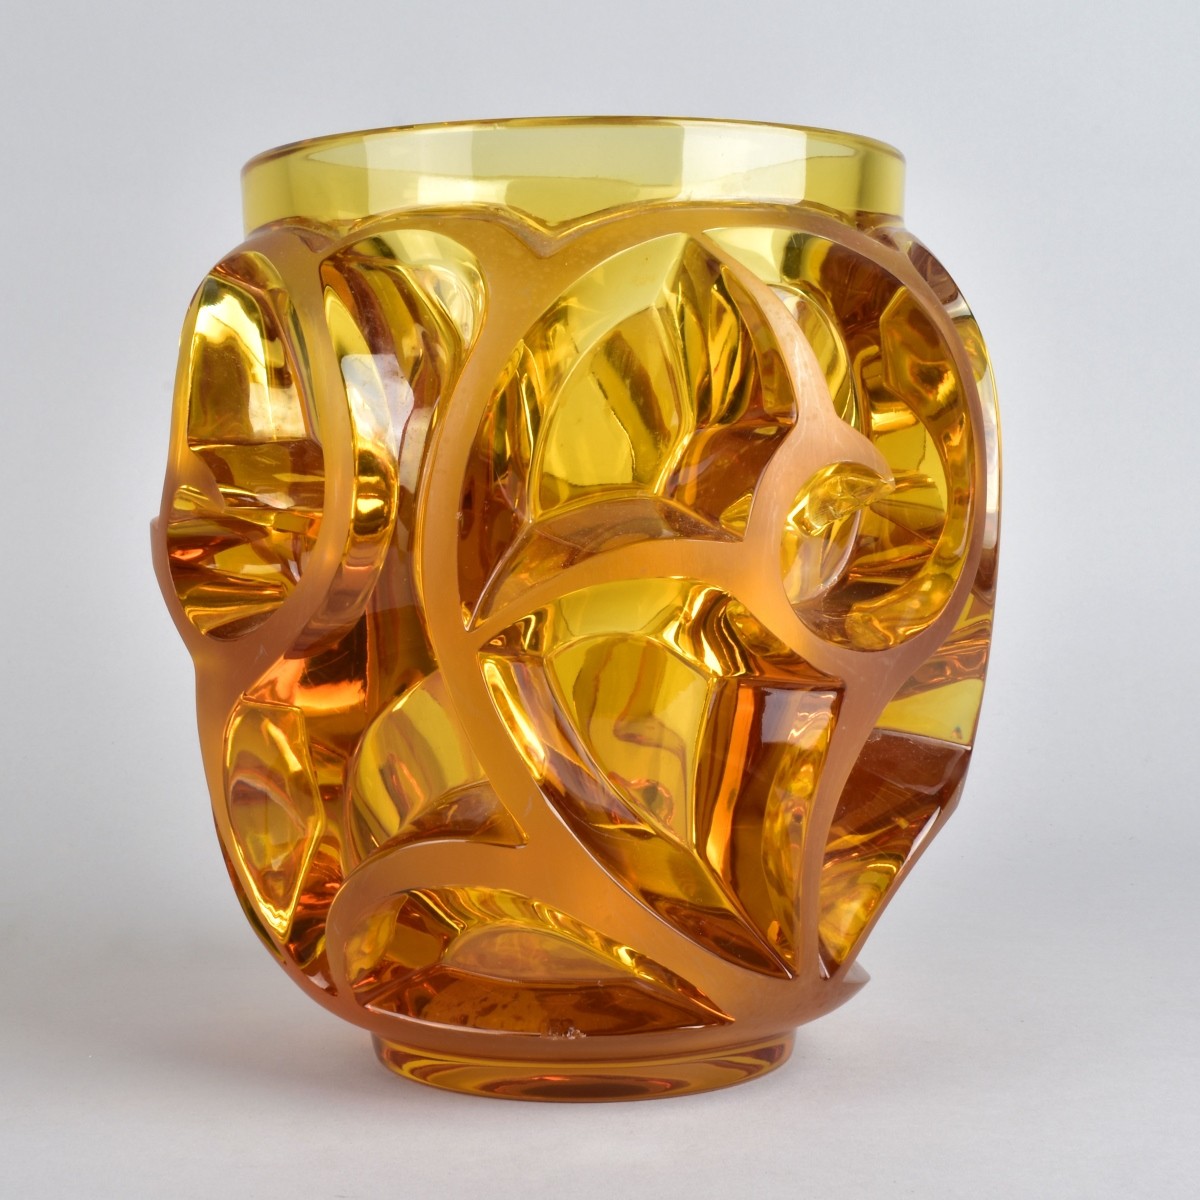 Lalique "Tourbillions" Crystal Vase